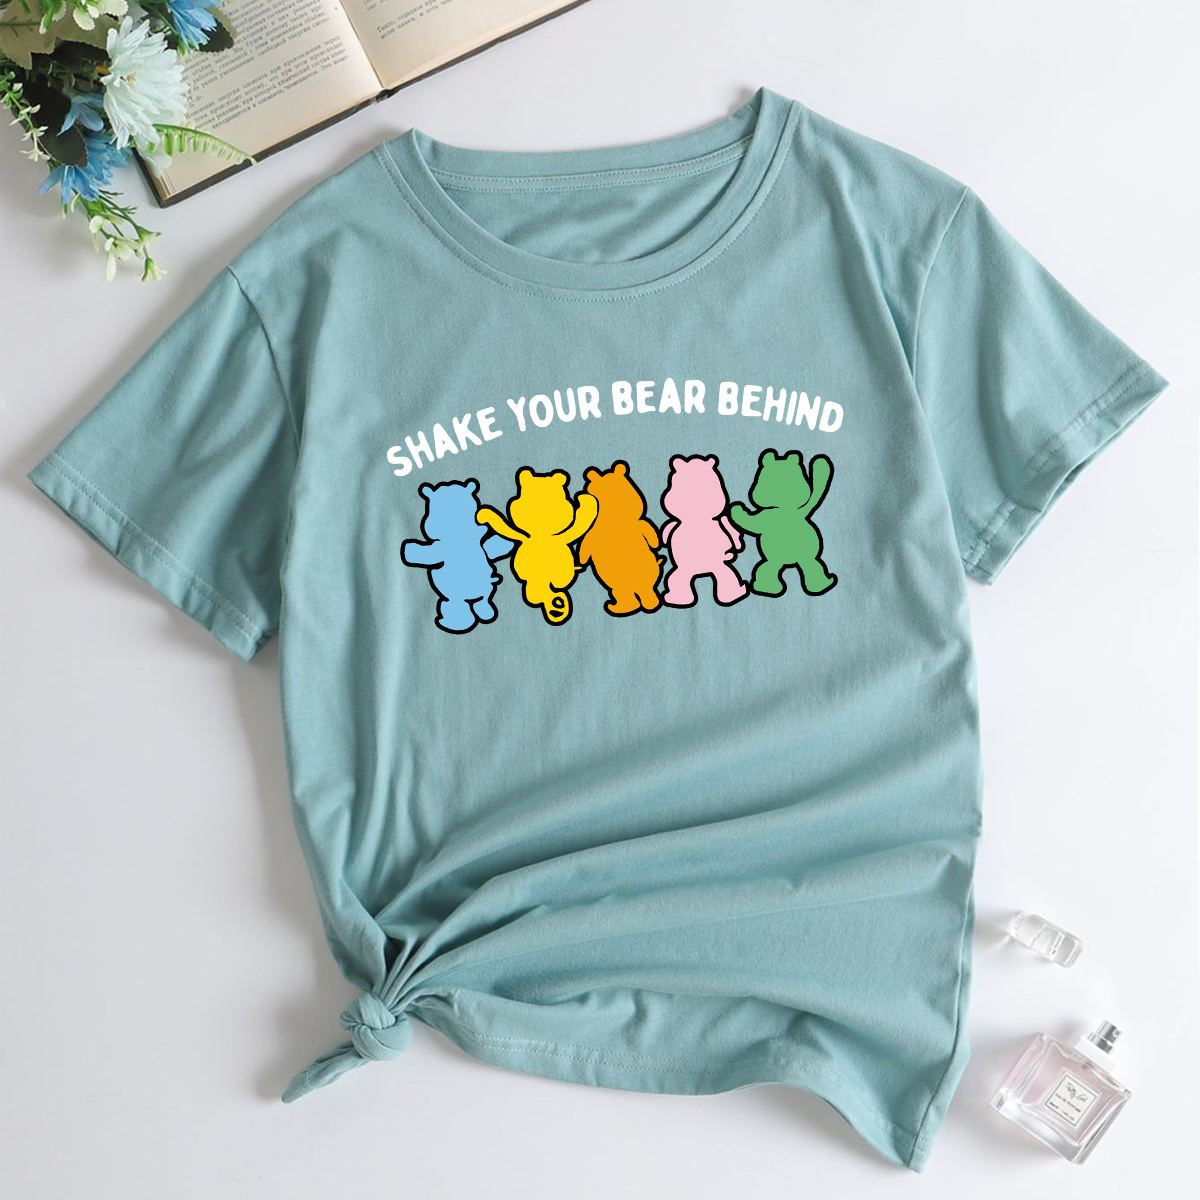 Care Bears Cute shirt, Care Bears Shake your Bear Behind Shirt, Pet Lover Funny Cartoon Unisex Custom shirt, Care Bears lover gift shirt